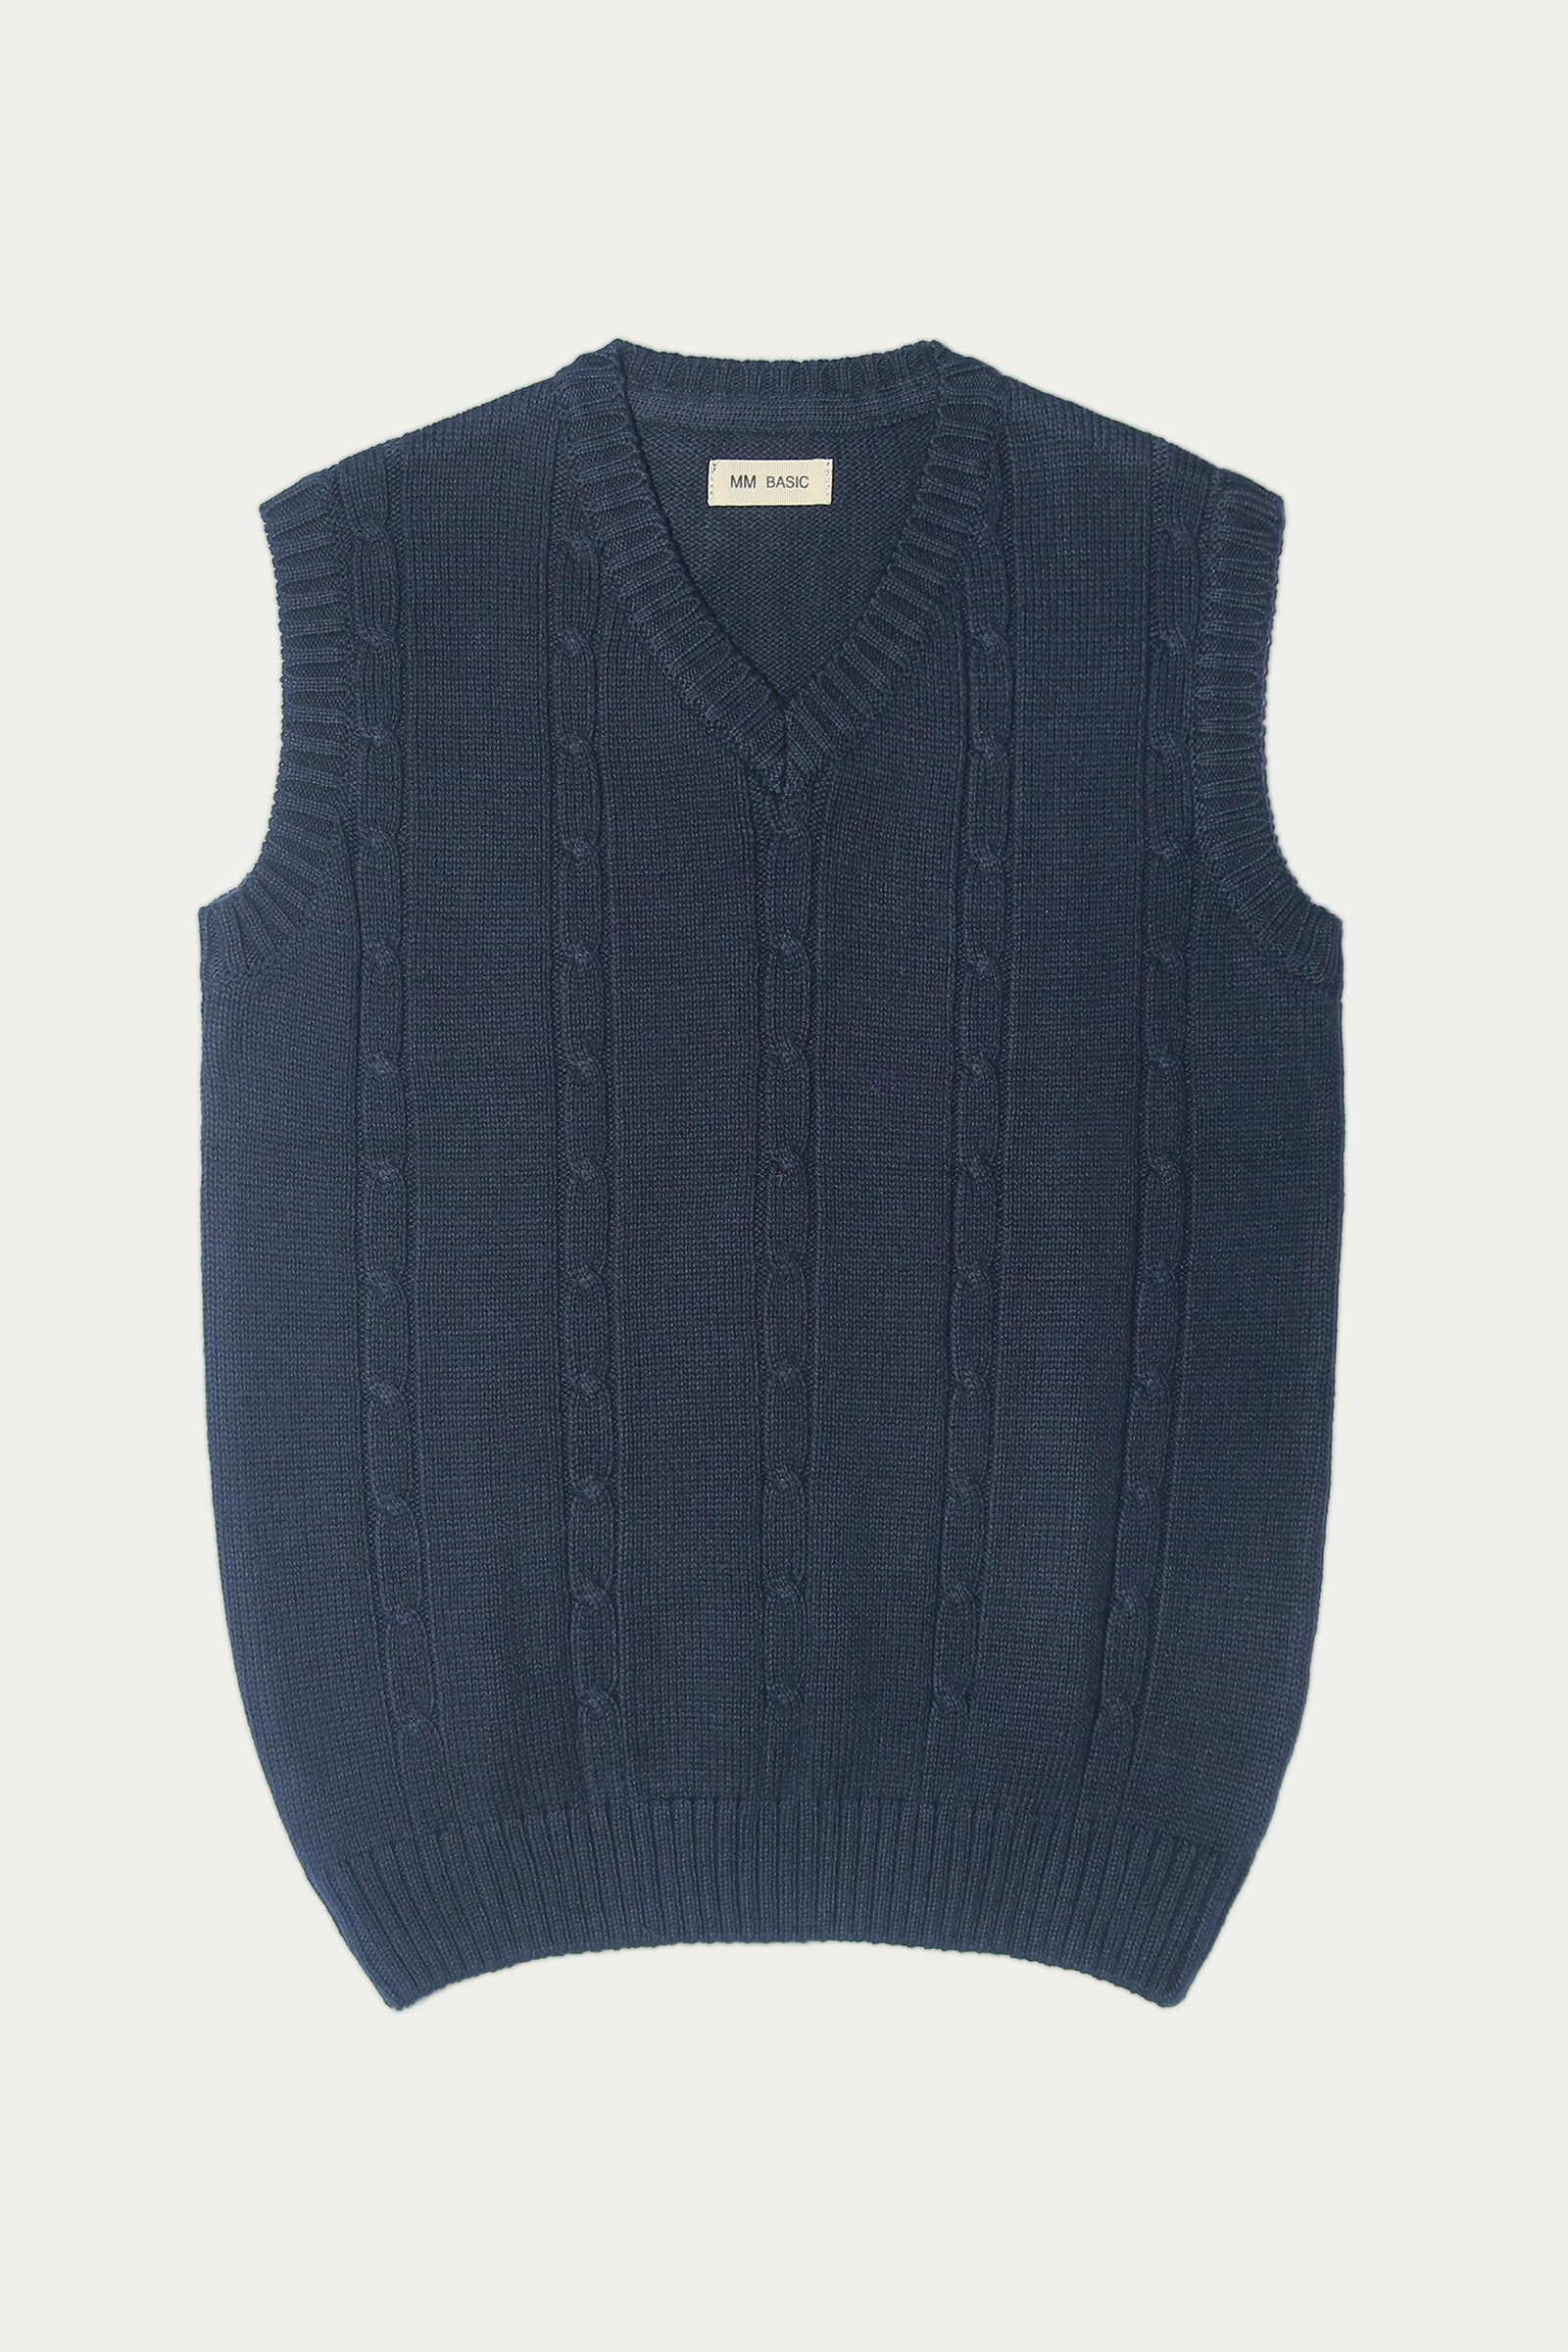 Sleeveless sweater (MSBASIC-SL-01)